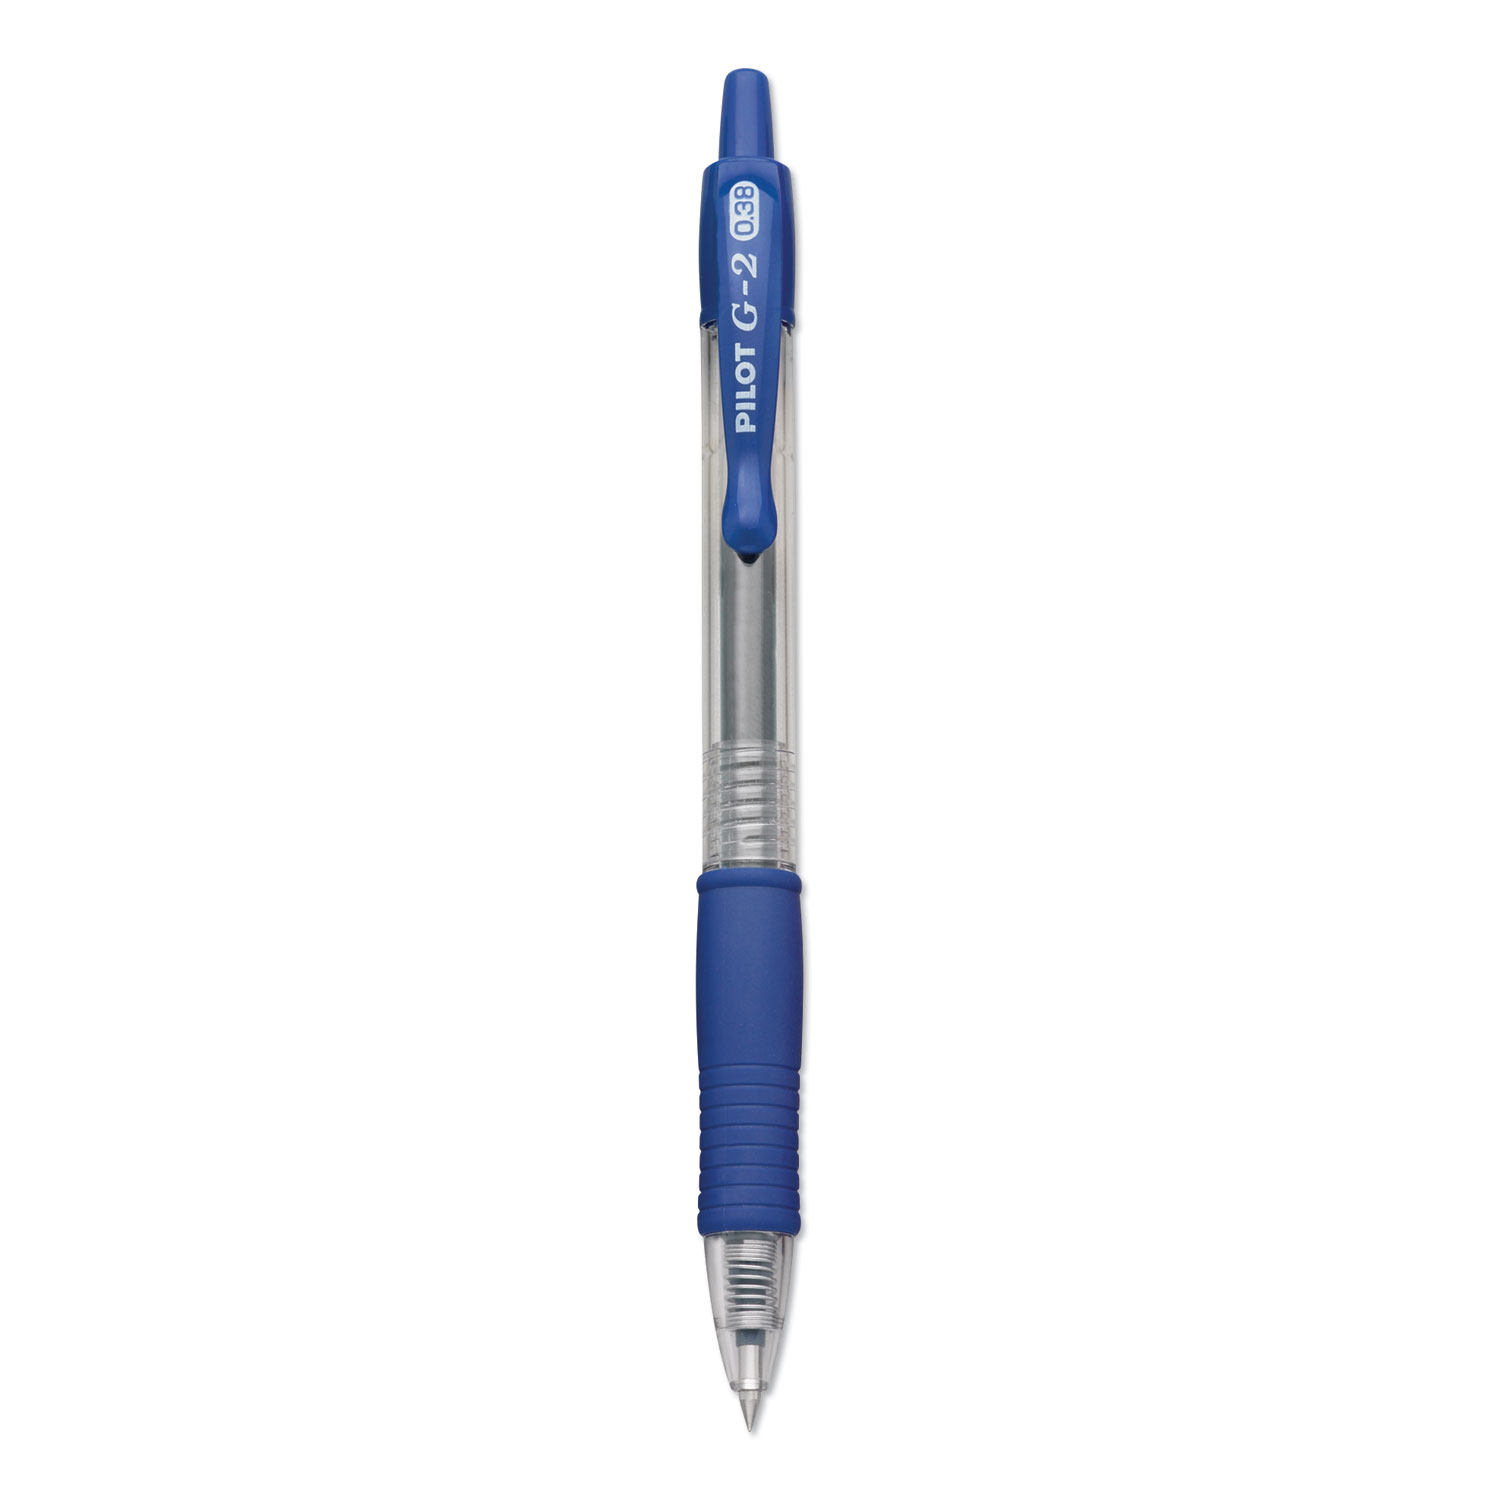 G2 Premium Gel Pen Convenience Pack, Retractable, Extra-Fine 0.38